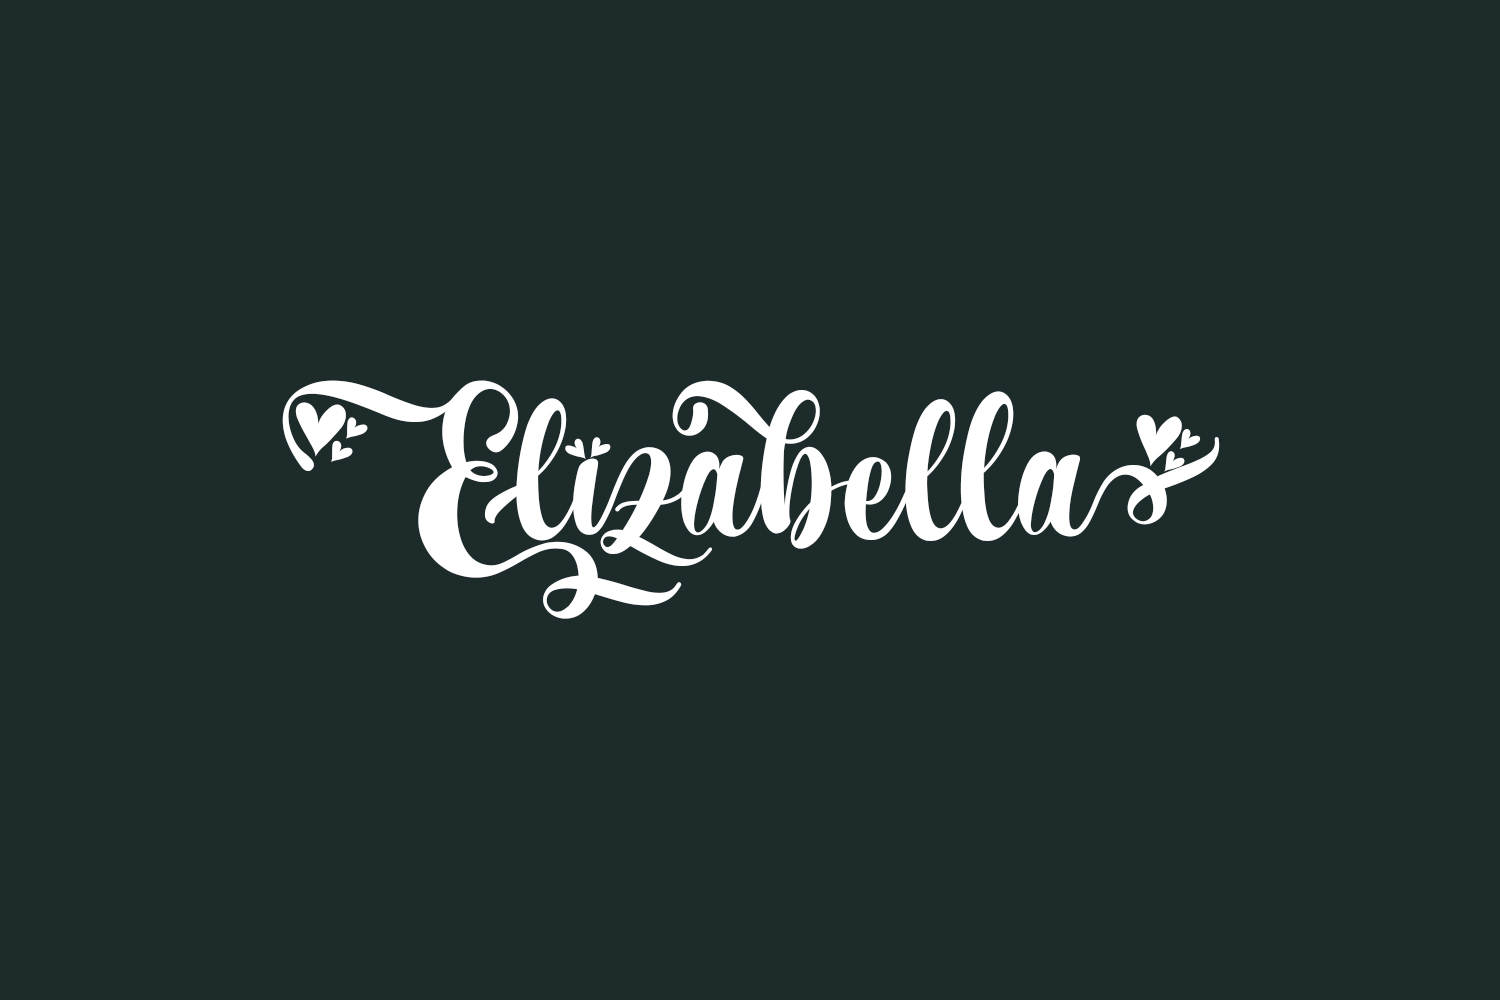 Elizabella Free Font